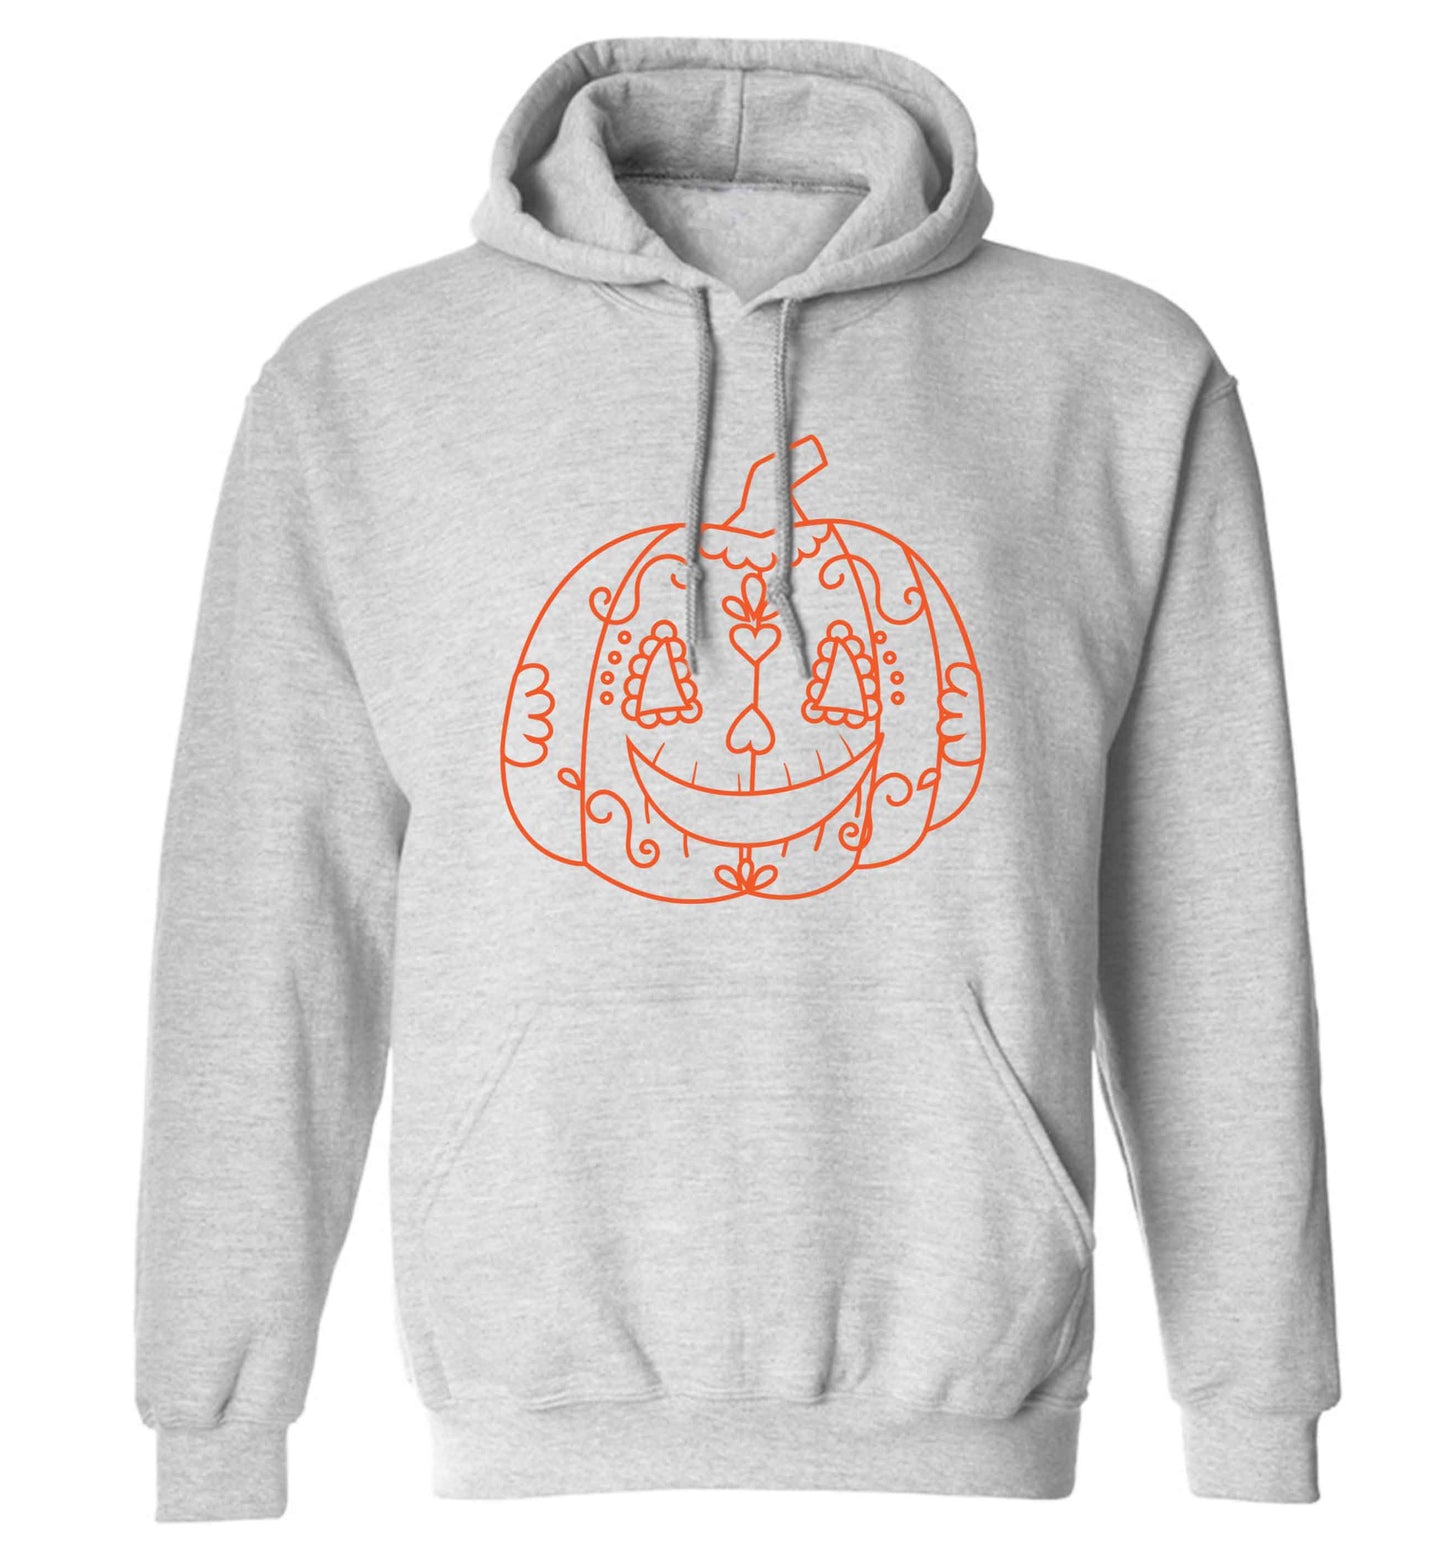 Pumpkin sugar skull adults unisex grey hoodie 2XL